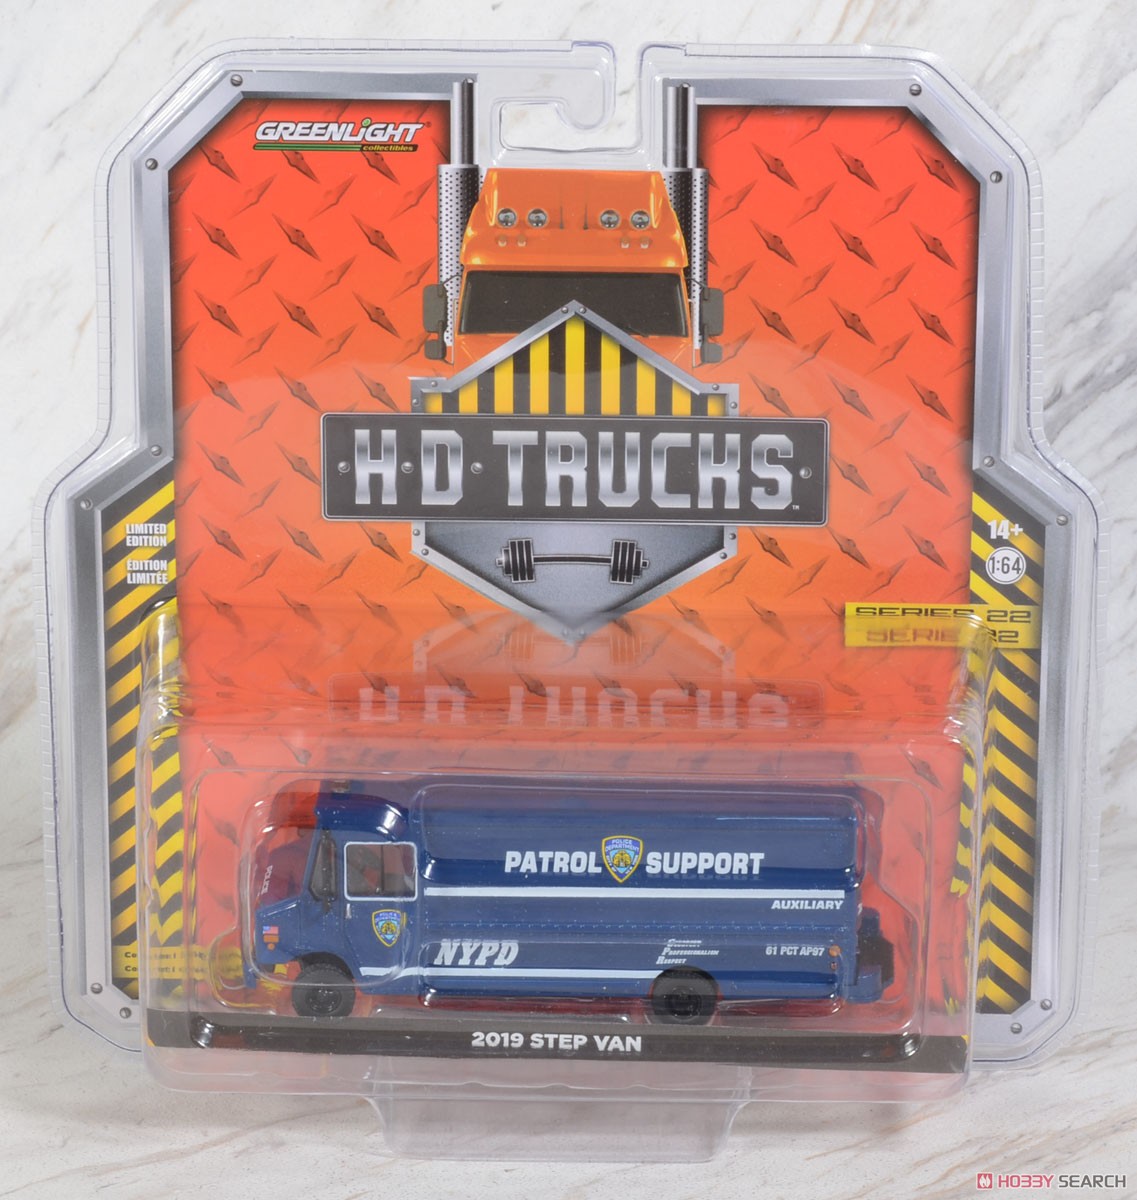 H.D.Trucks Series 22 (ミニカー) パッケージ1